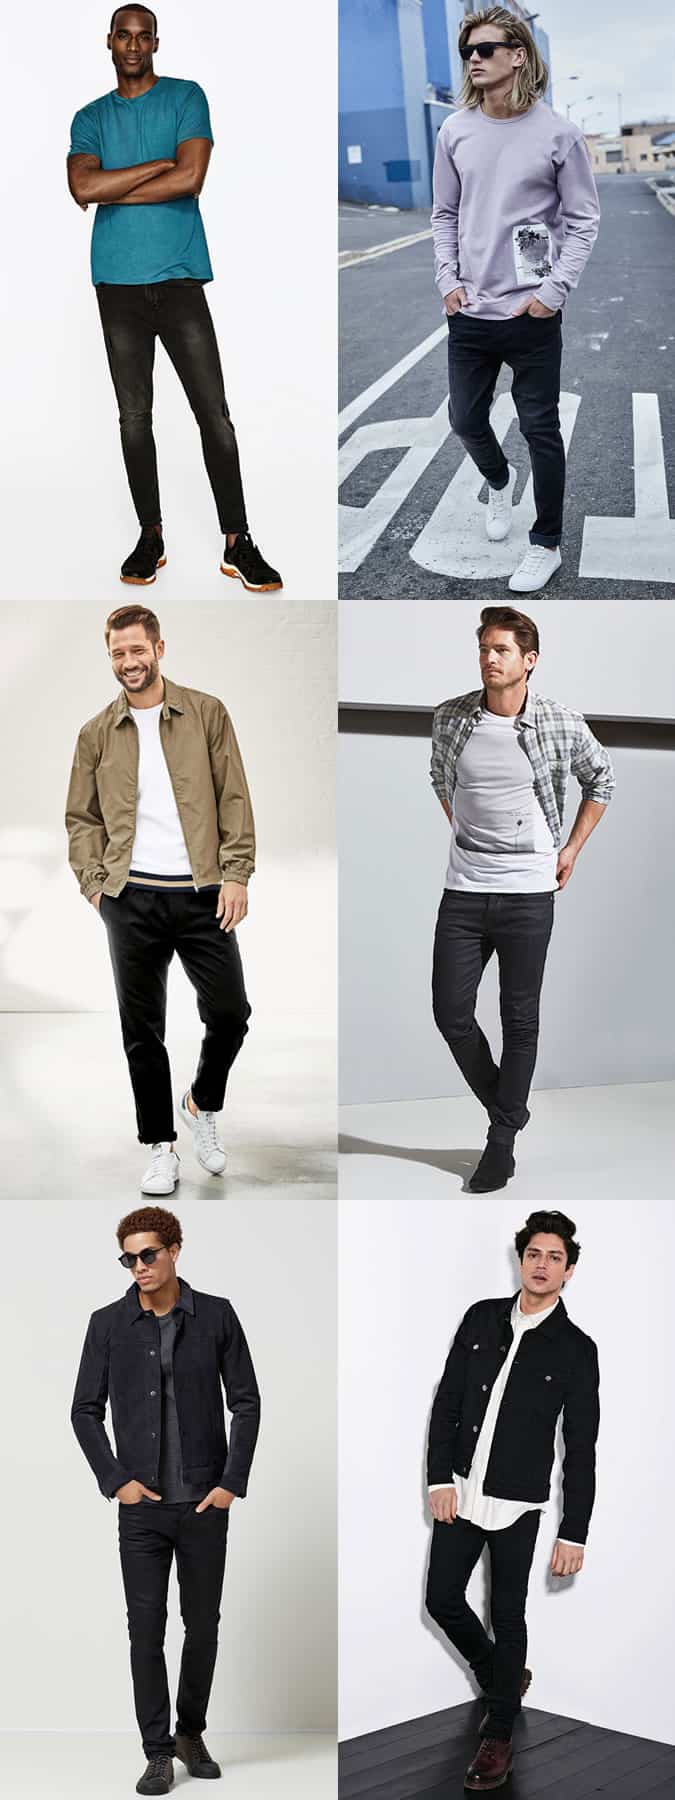 Men's Black Jeans Outfit Inspiration